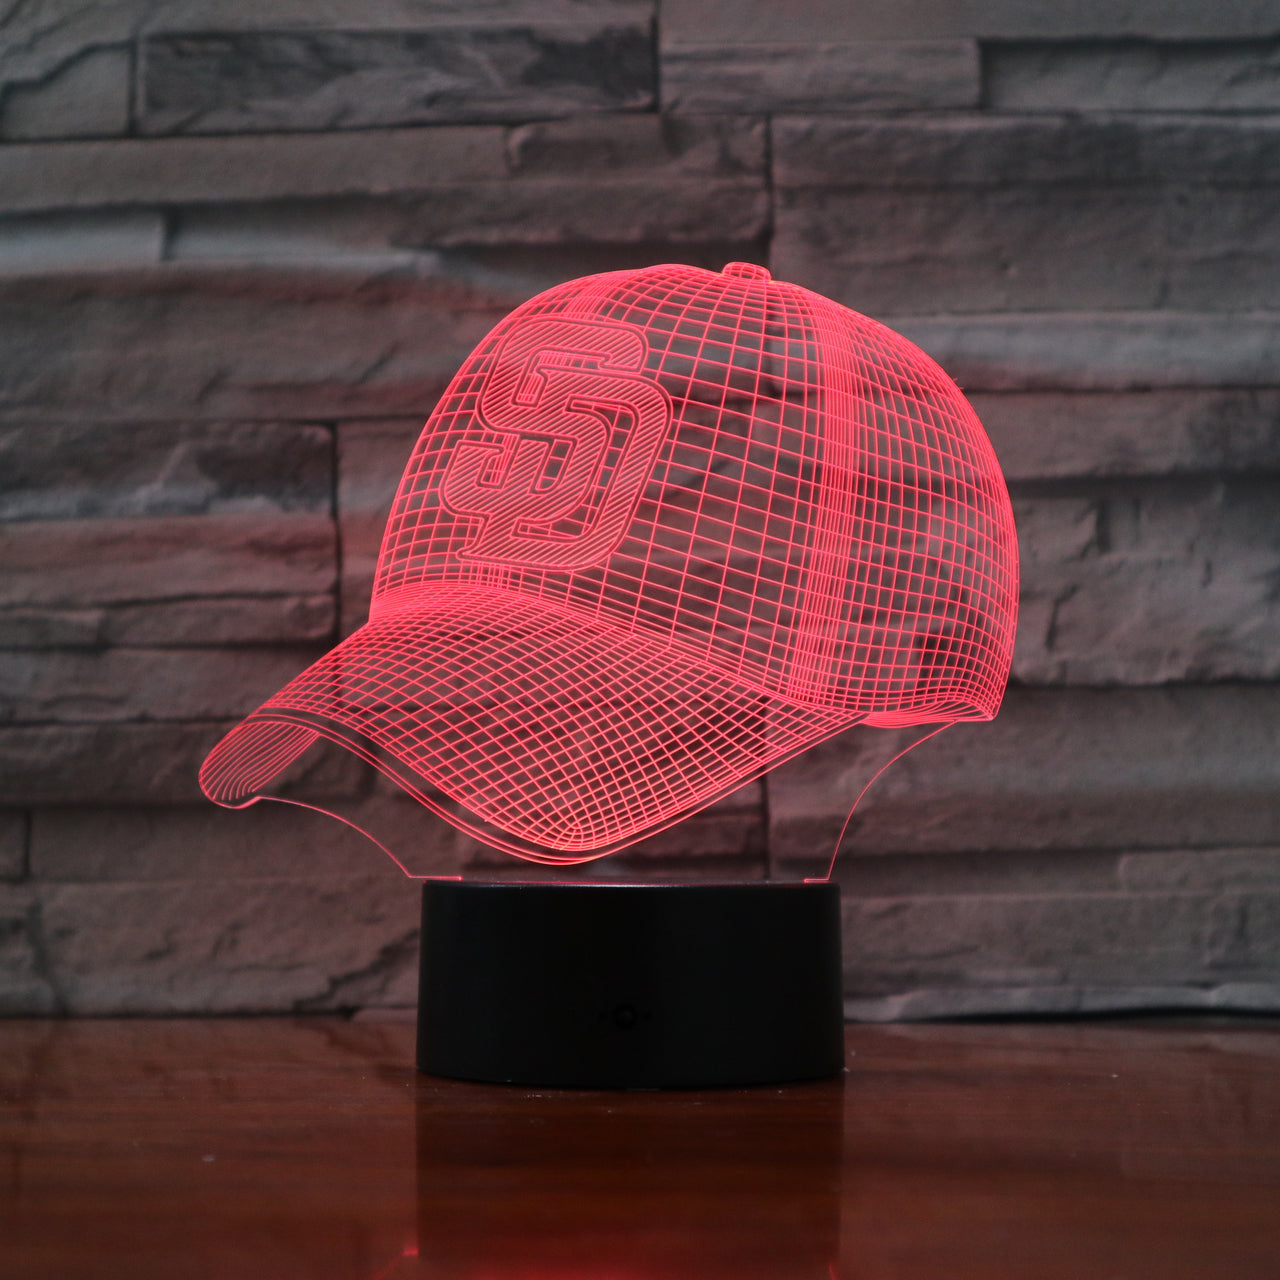 MLB SAN DIEGO PADRES 3D LED LIGHT LAMP